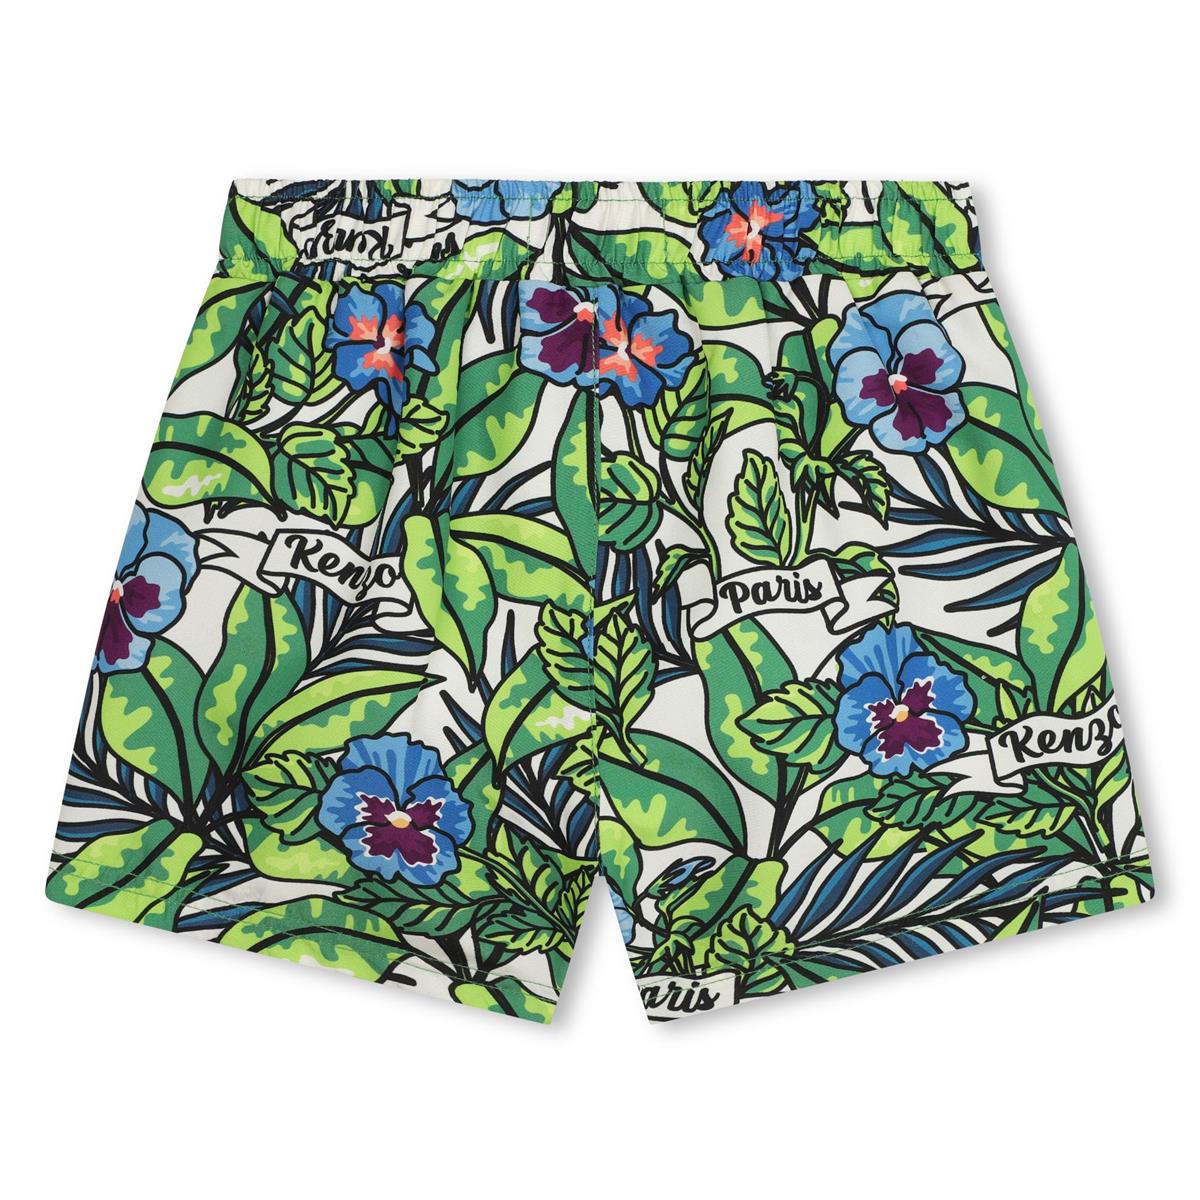 Boys Green Swim Shorts